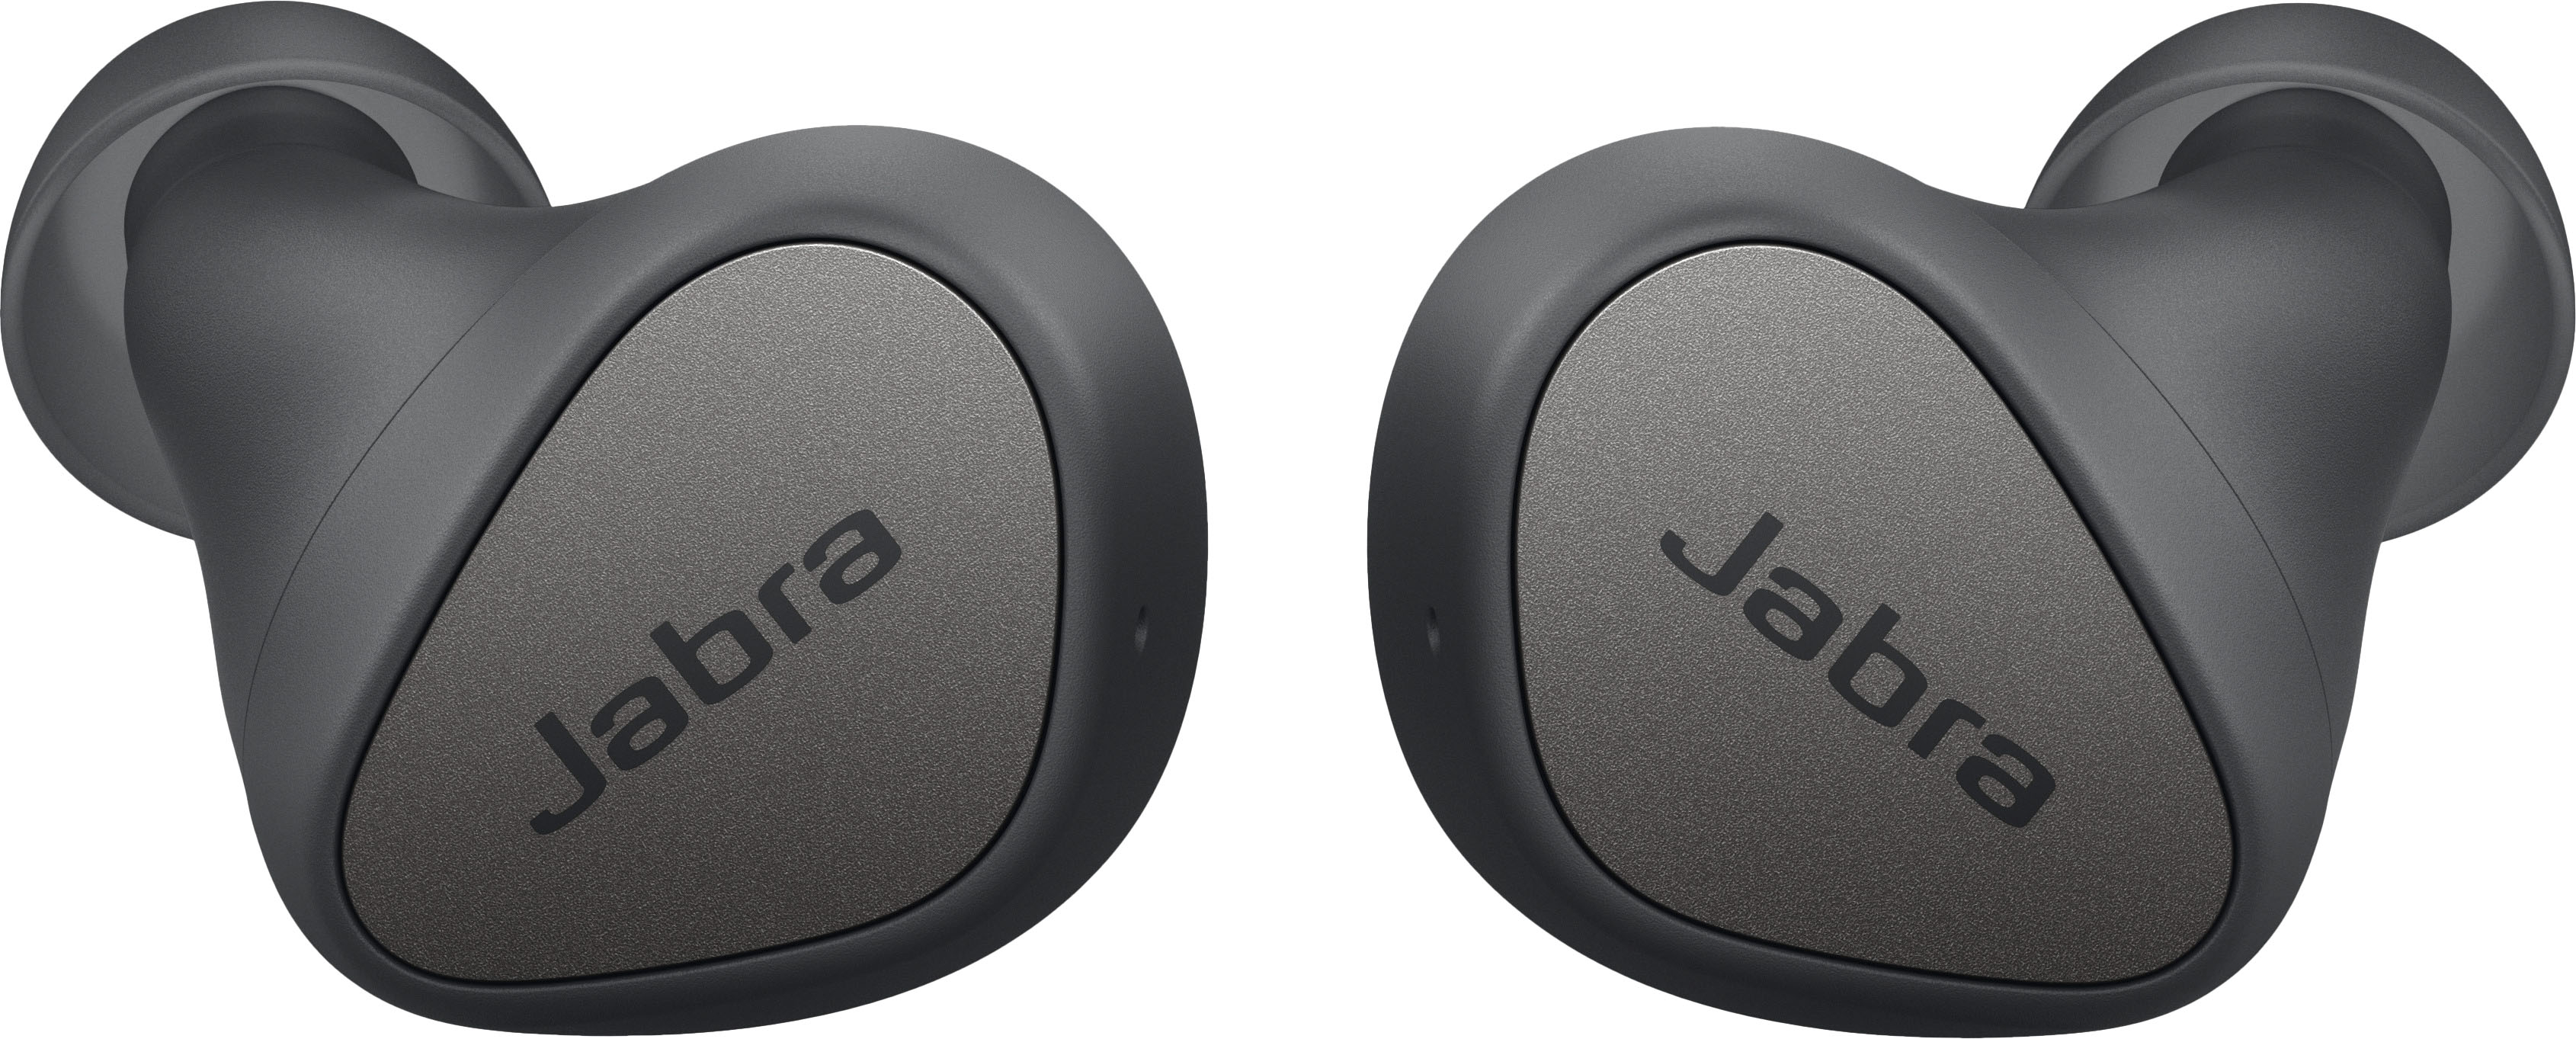 Jabra Elite True Wireless In-Ear Headphones Dark Gray 100-91410000-02 - Best Buy